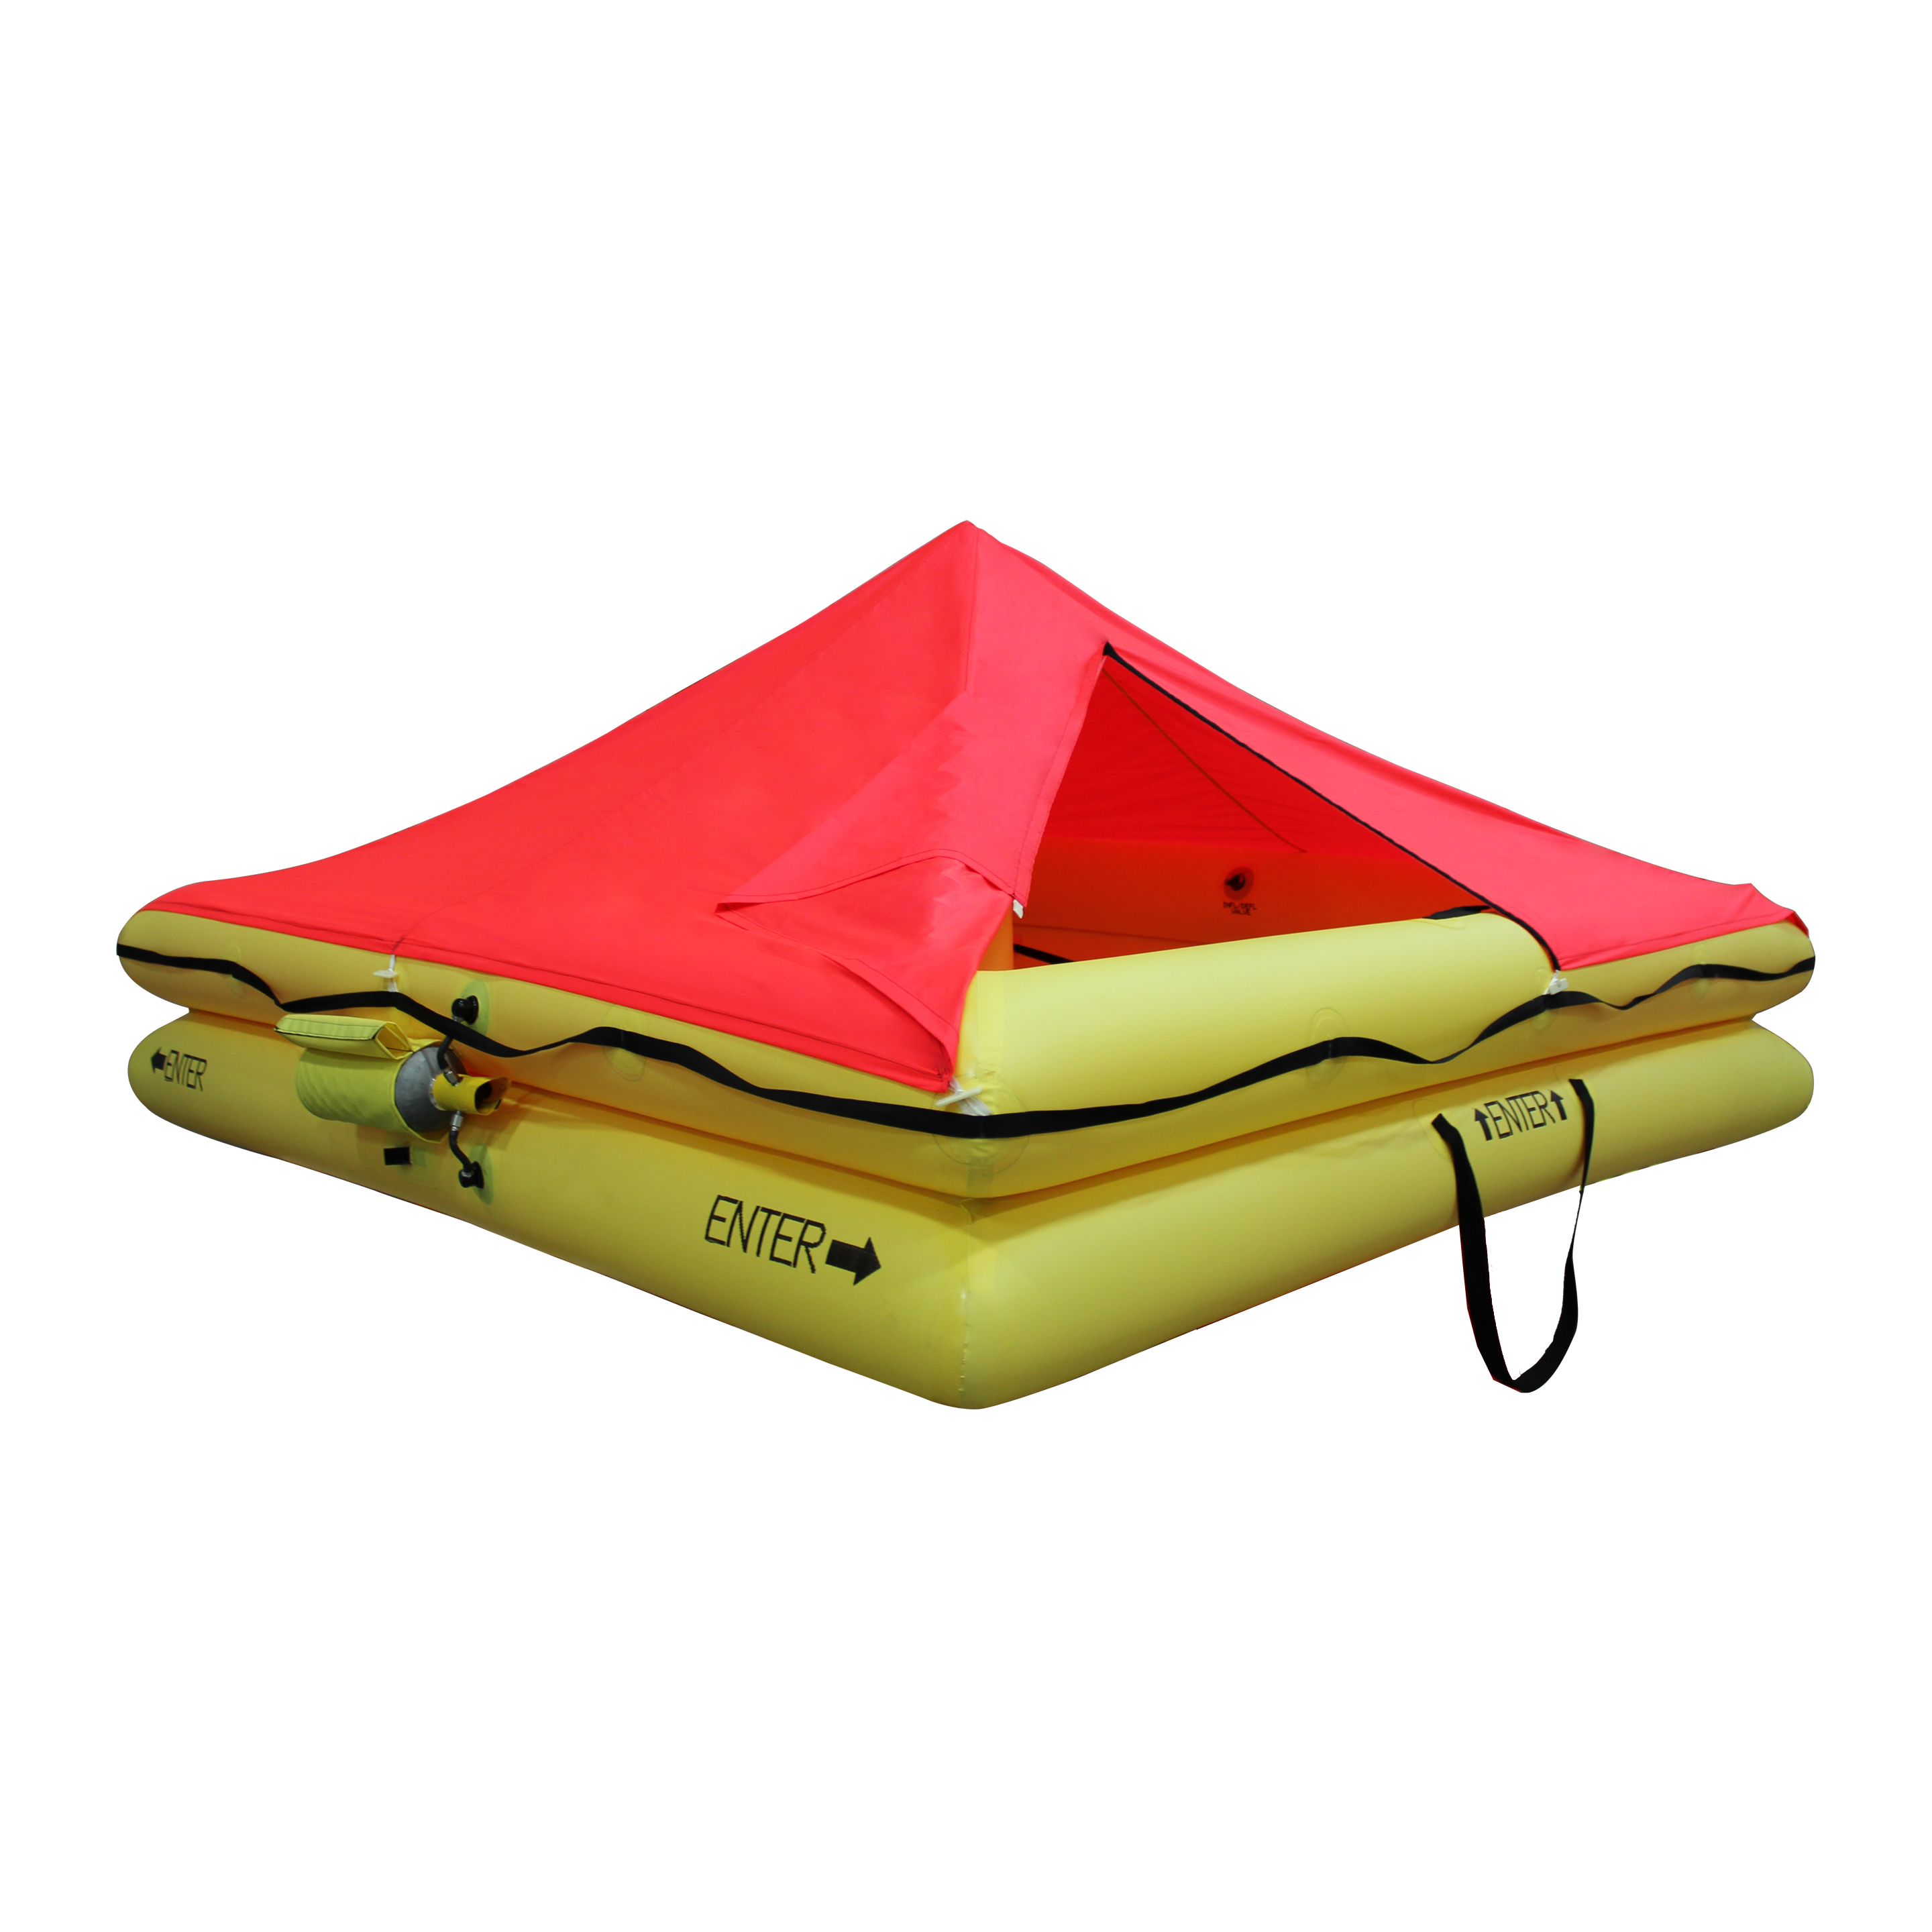 TSO 12 Person Life Raft with FAR 91 Survival Equipment Kit